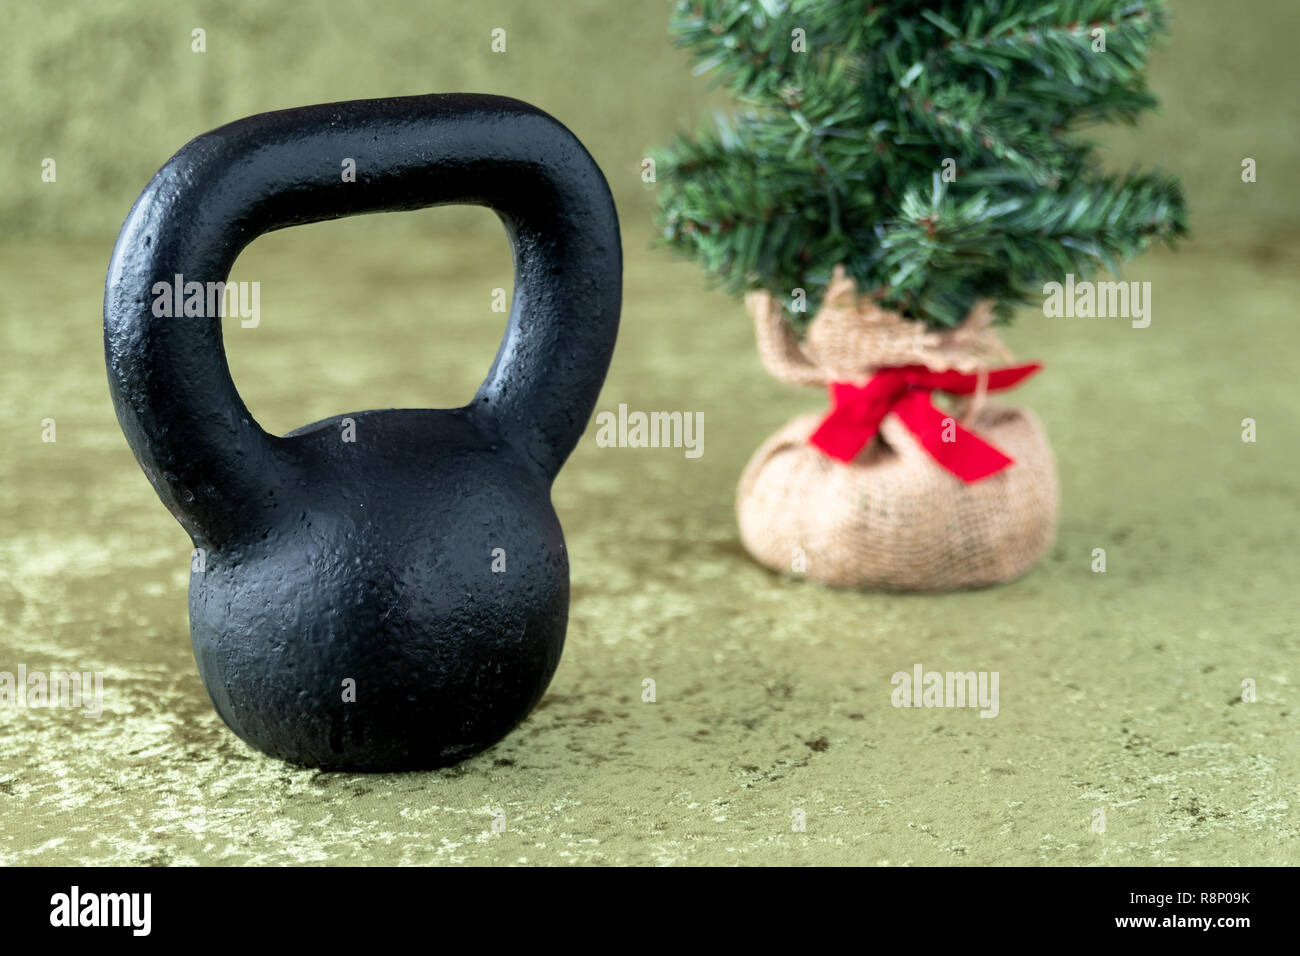 Black kettlebell on a green velvet background, holiday fitness, Christmas  tree in background Stock Photo - Alamy